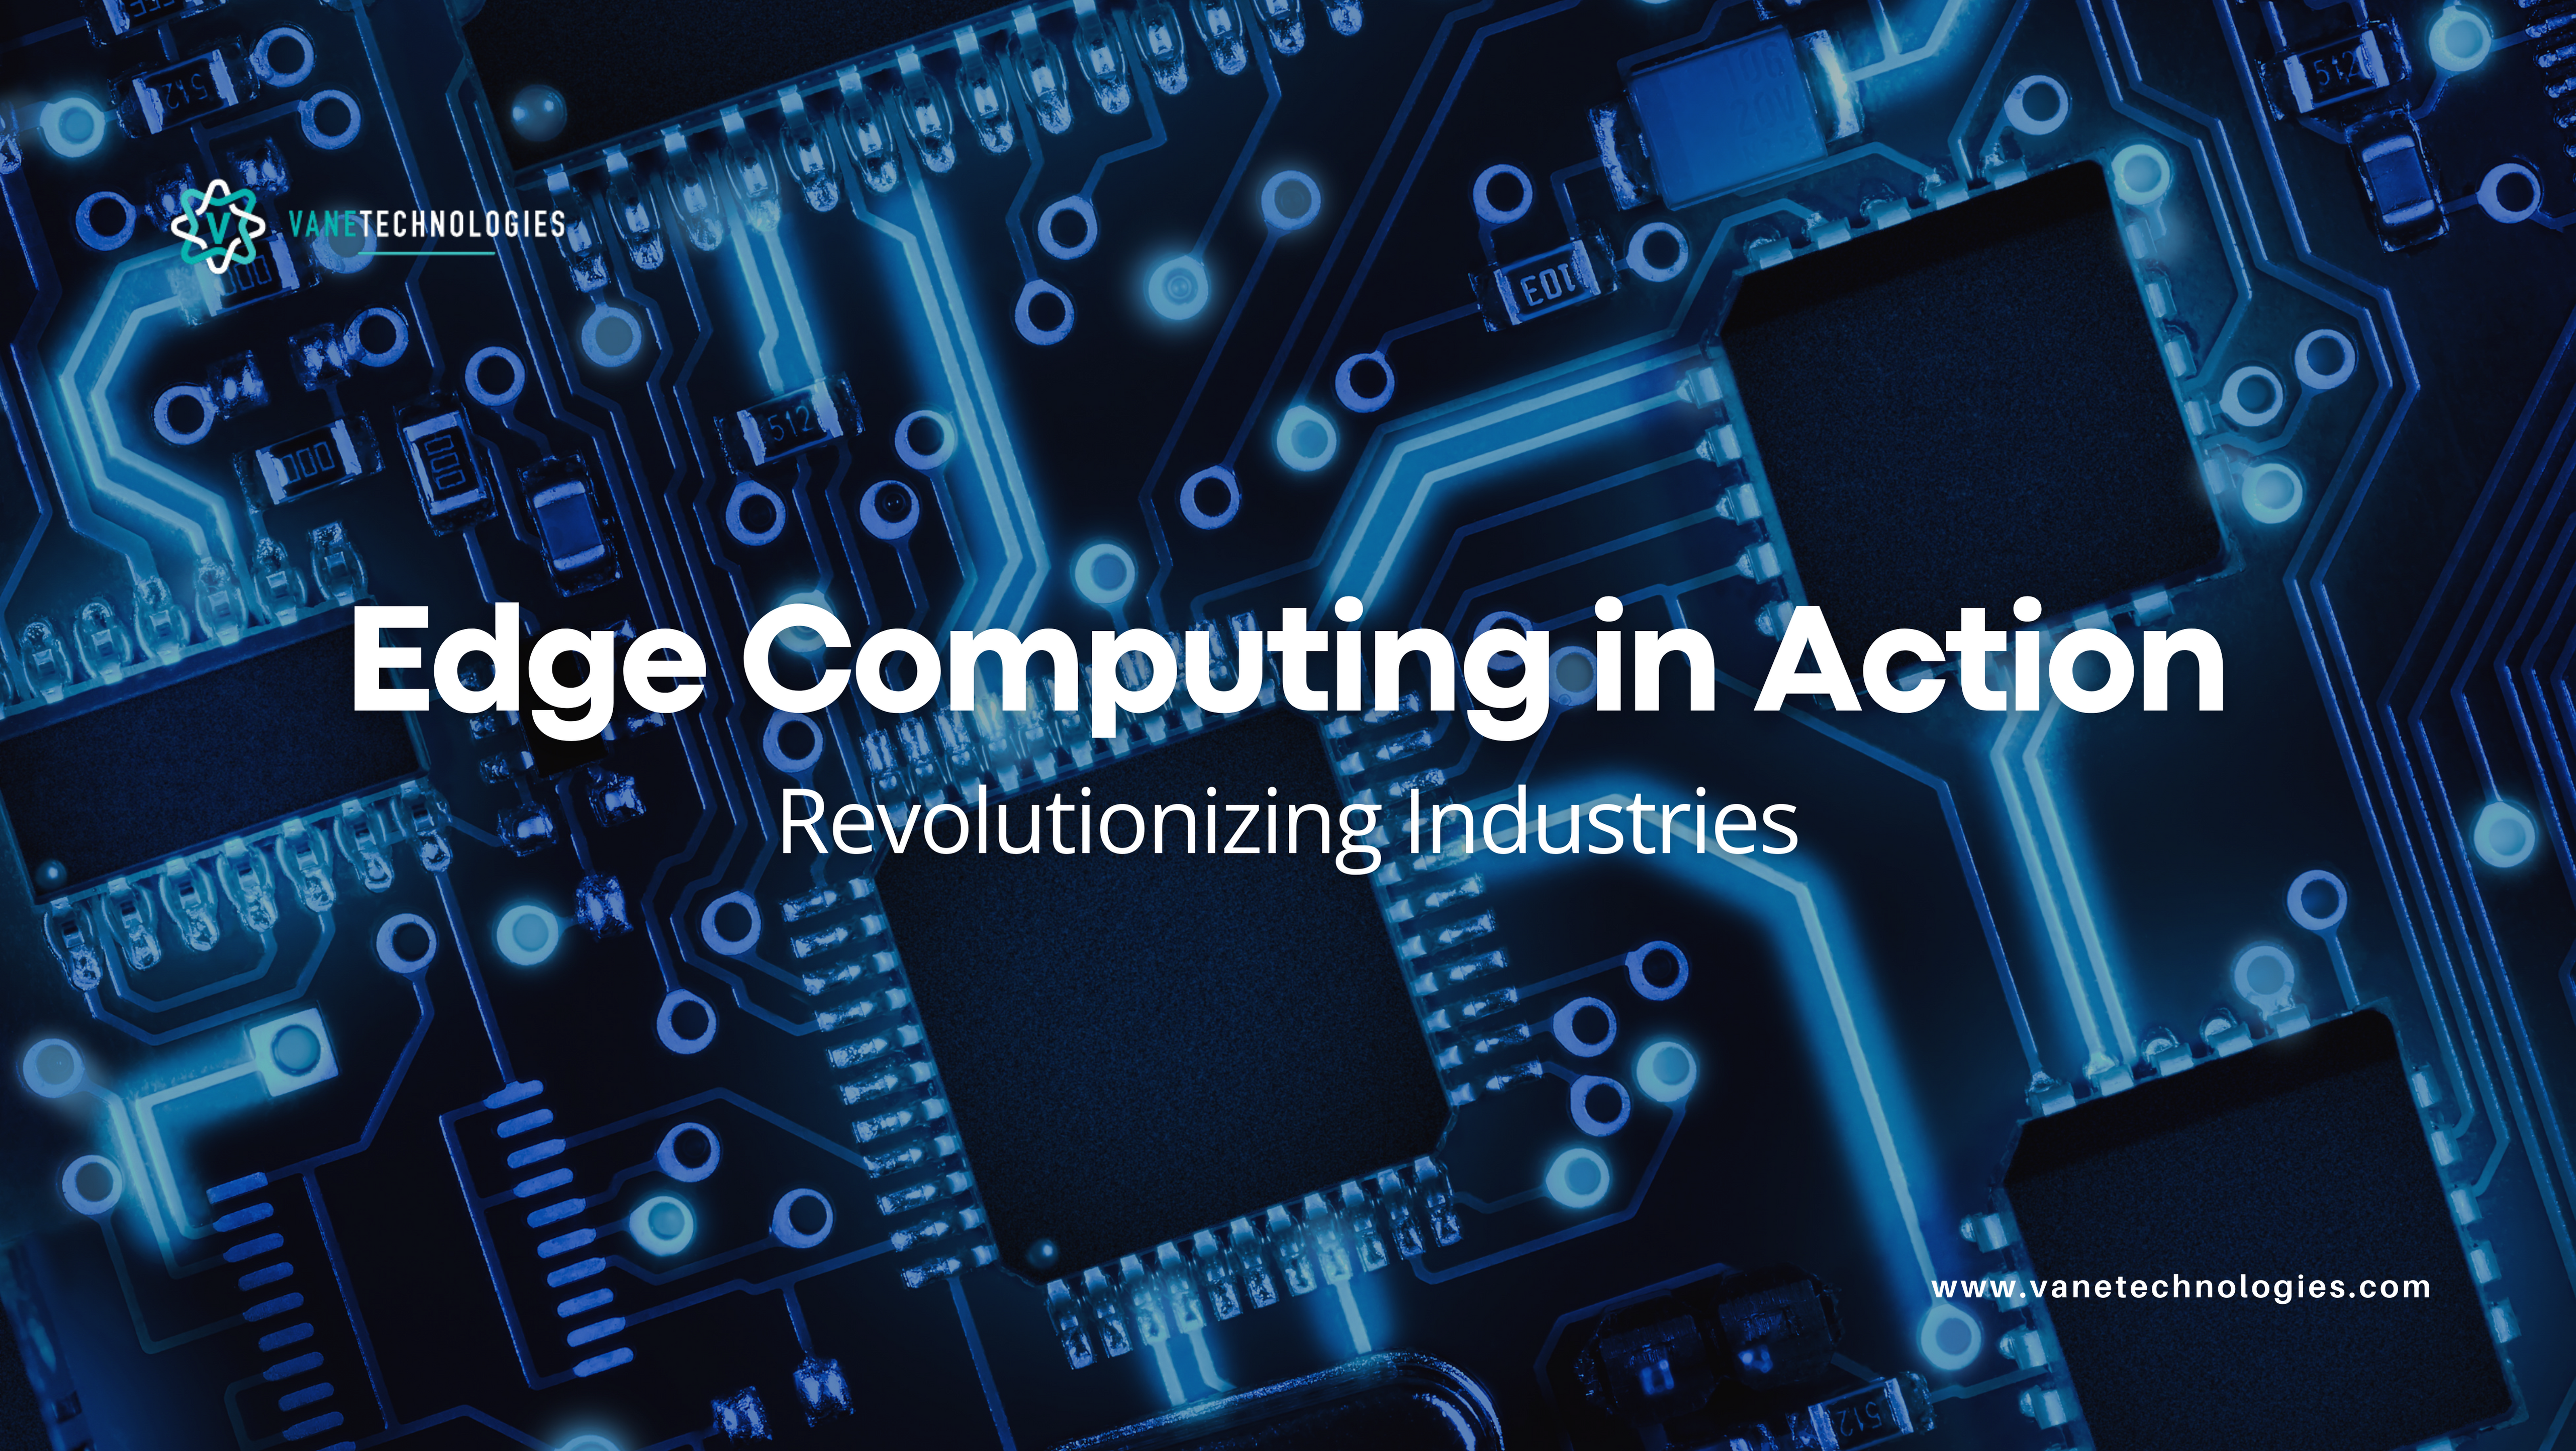 Edge Computing in Action: Revolutionizing Industries